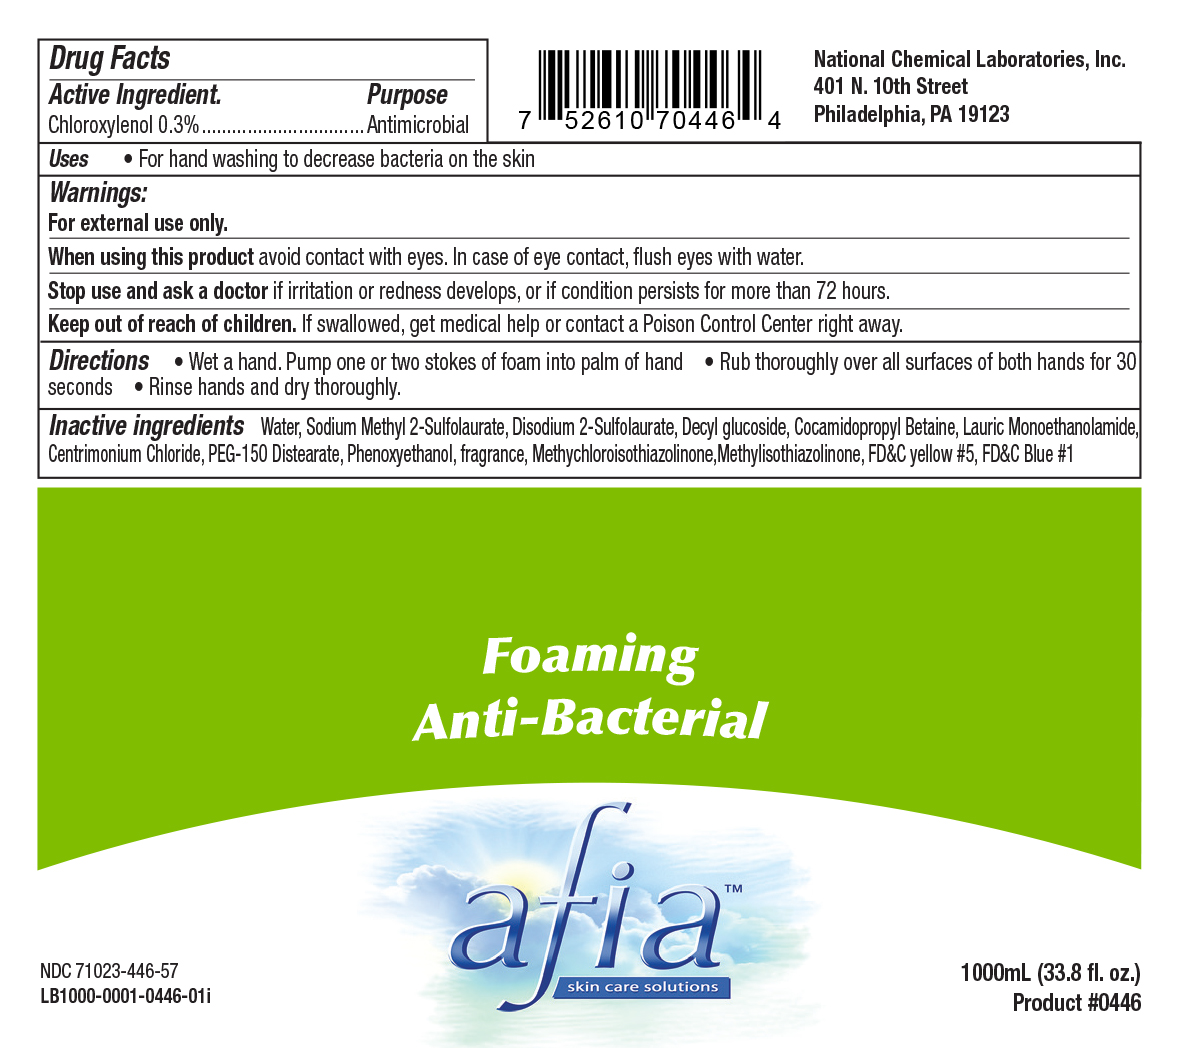 Afia Foaming Anti-Bacterial